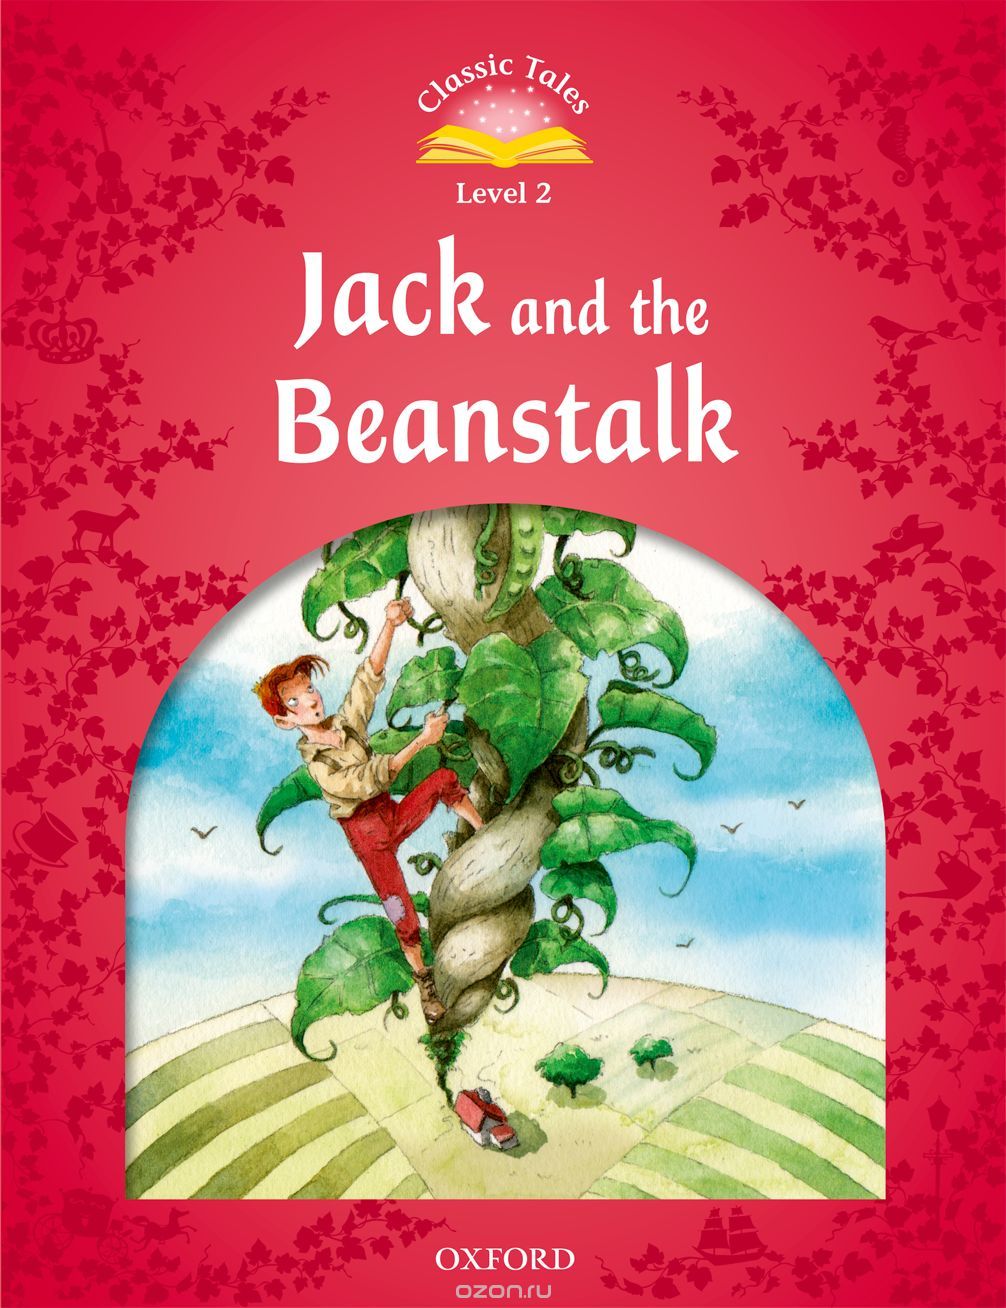 Скачать книгу "Classic tales LEVEL 2 JACK & THE BEANSTALK 2Ed"